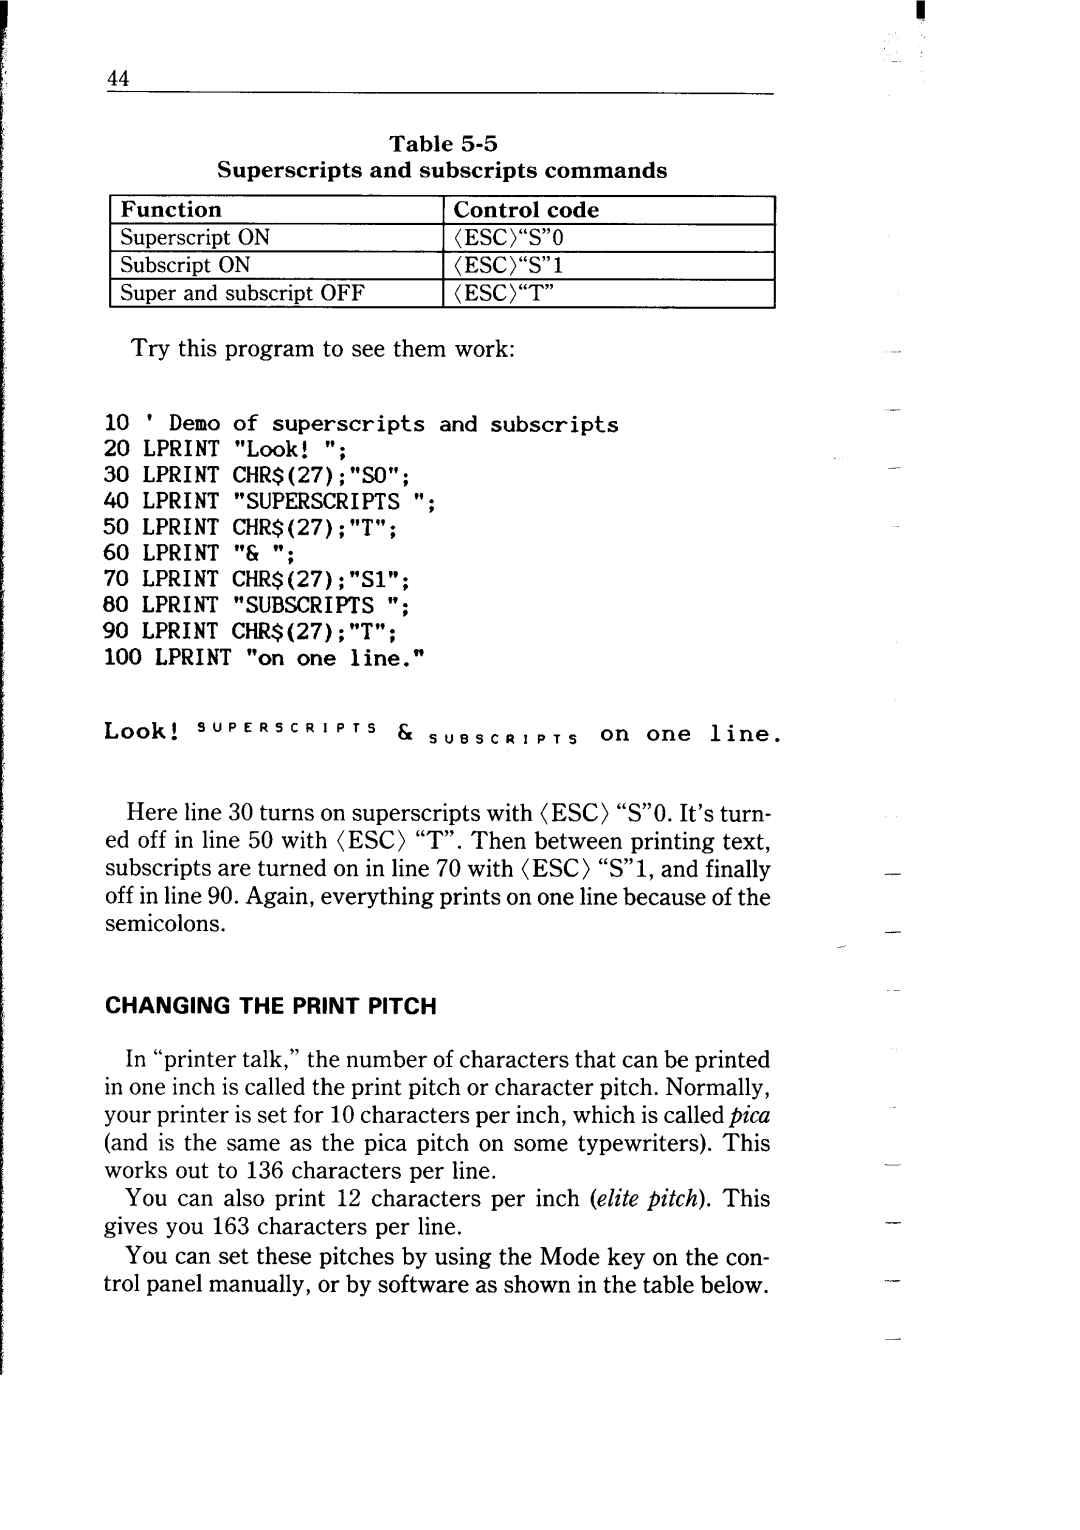 Star Micronics NB-15 user manual Superscript ON 